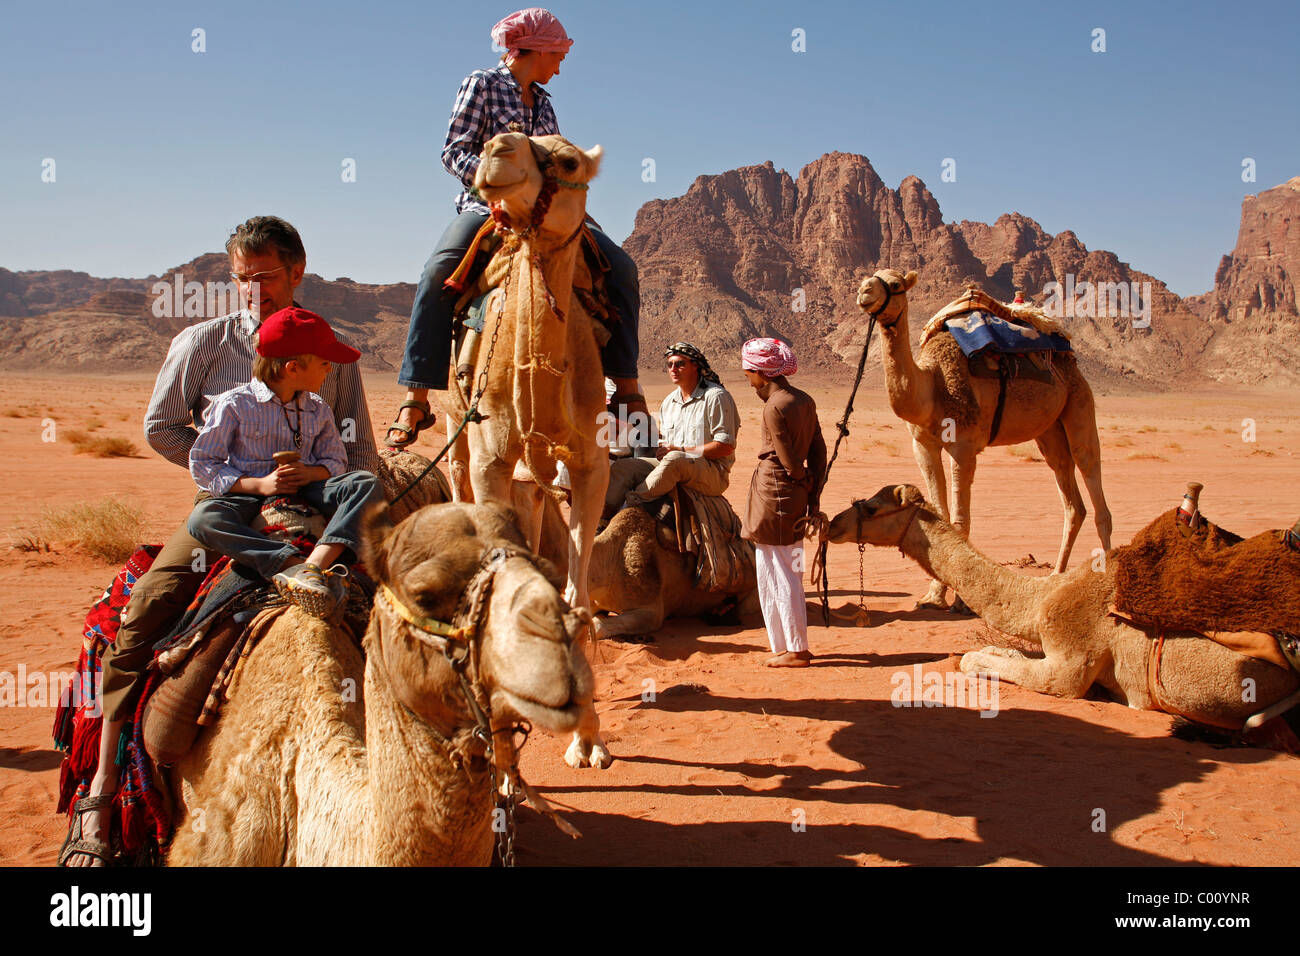 Tourists riding camels in the desert, Wadi Rum, Jordan. Stock Photo